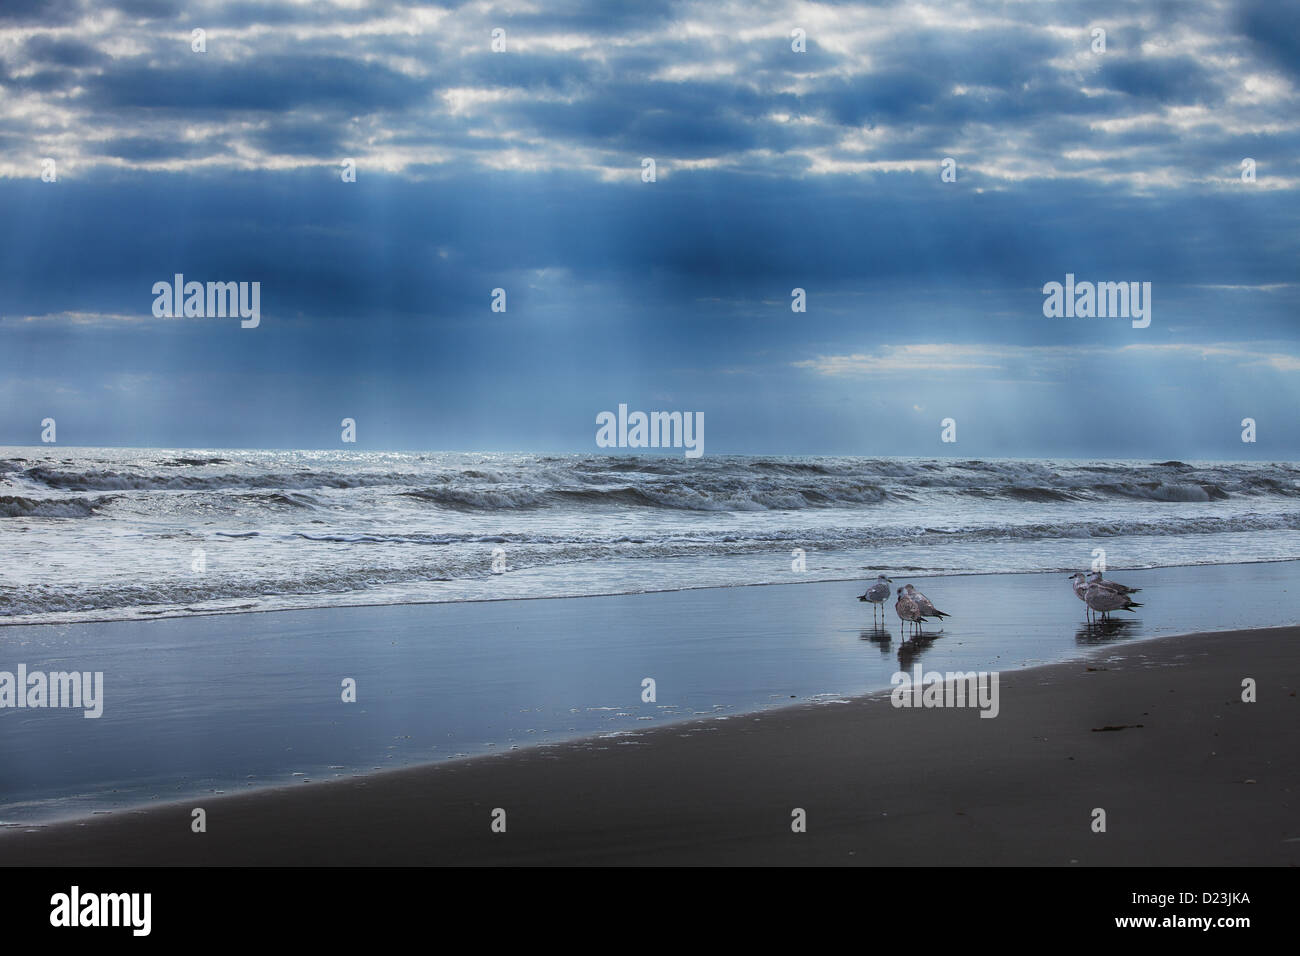 Four seagulls on the beach. Stock Photo